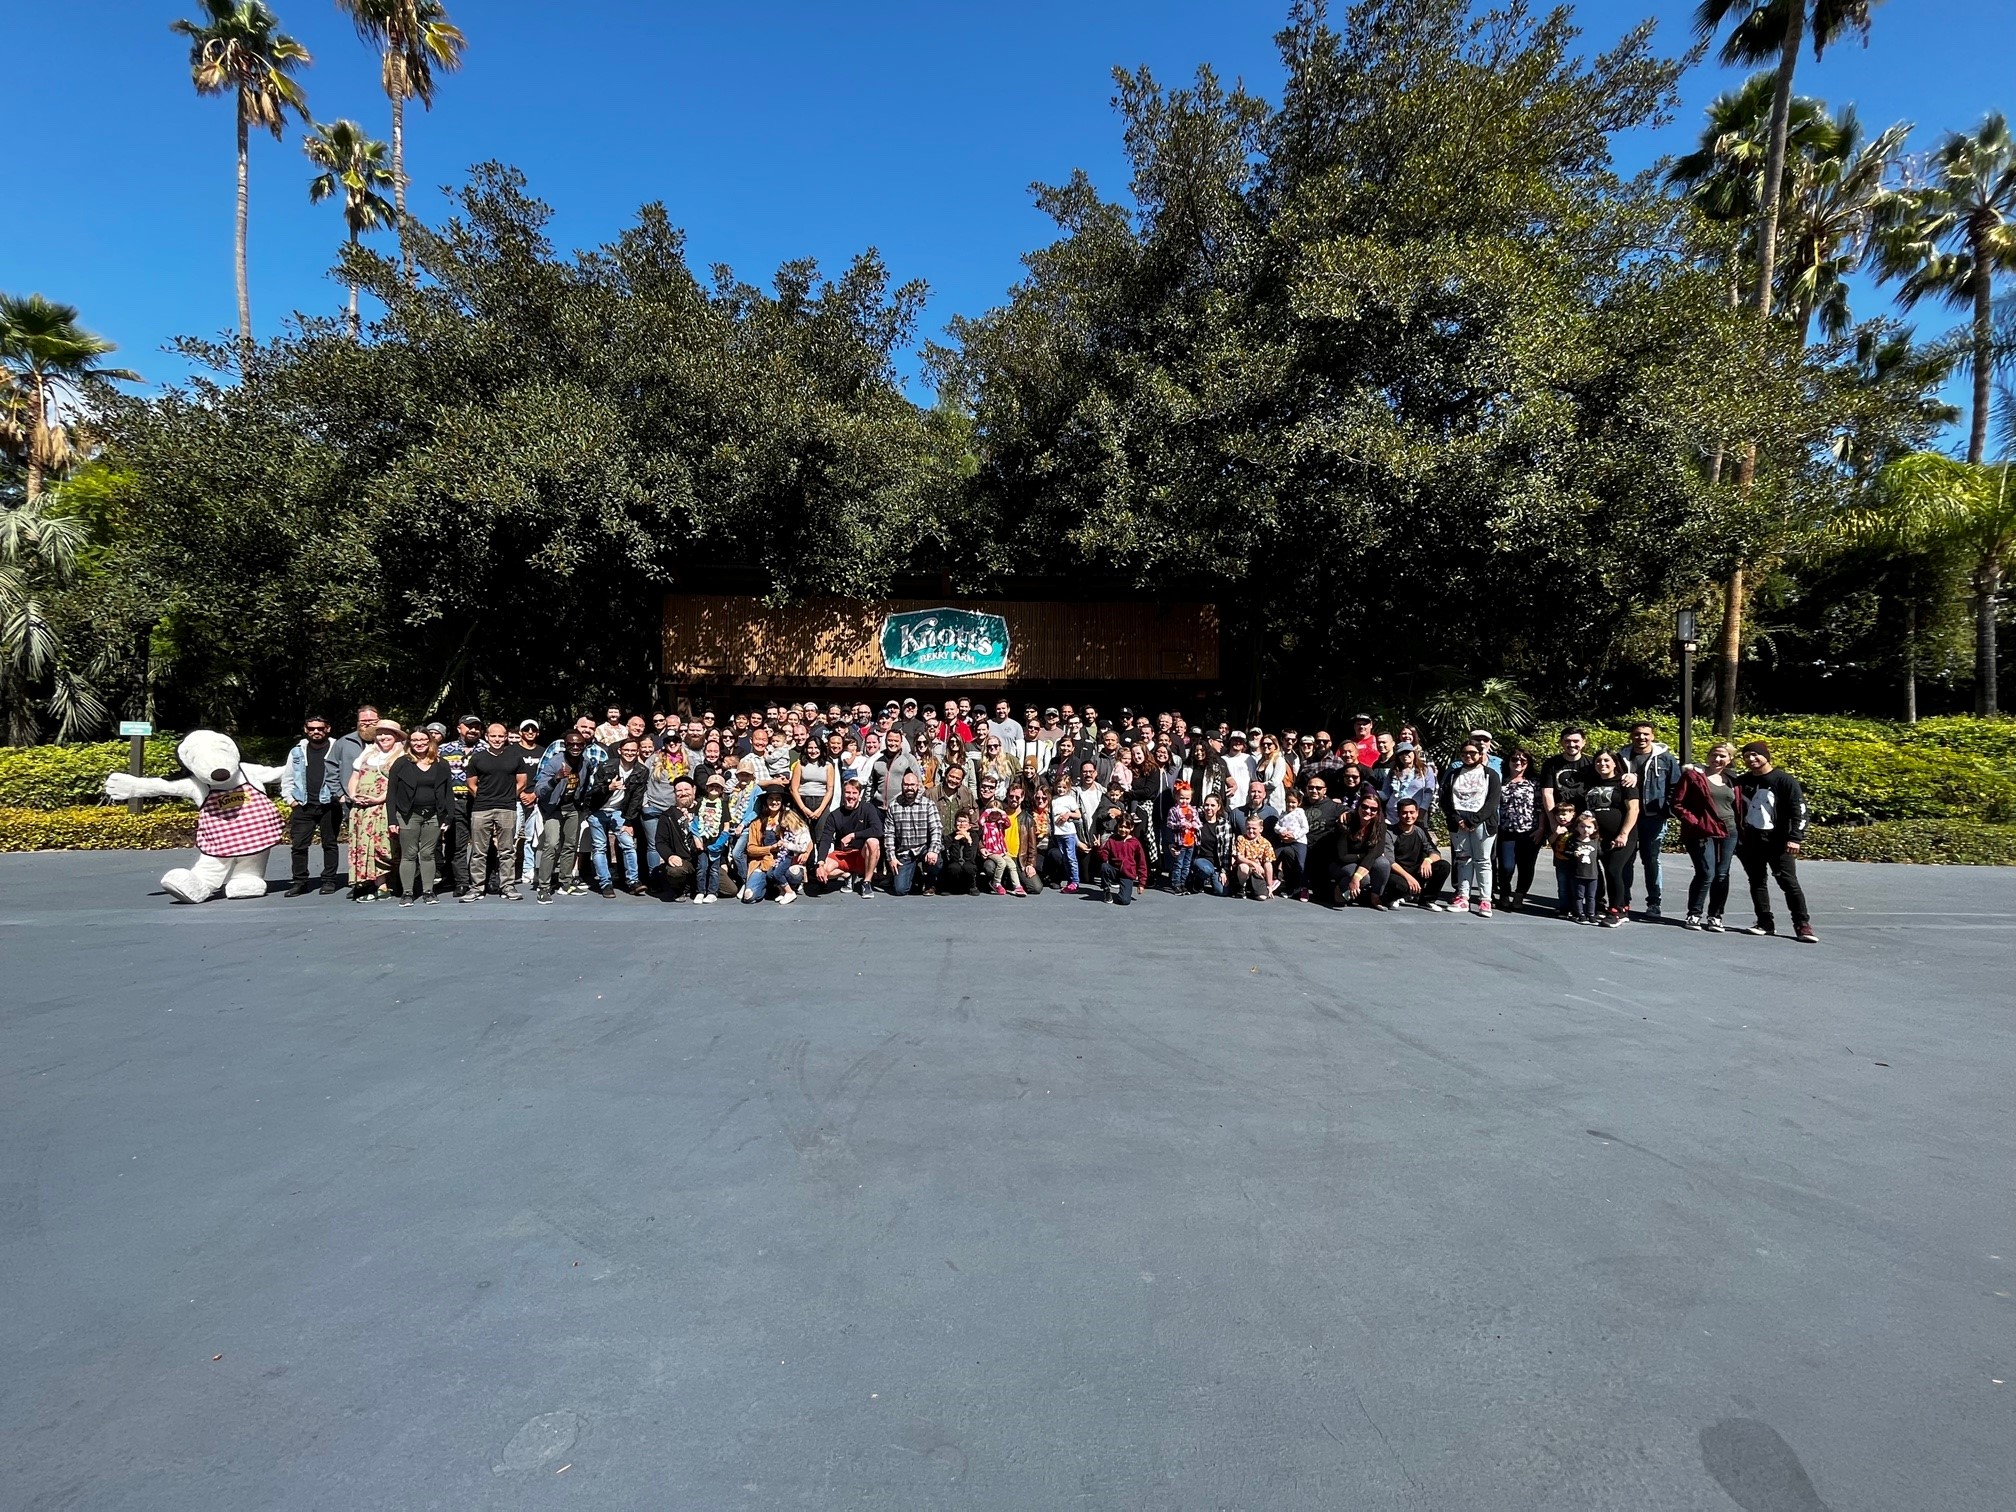 Storyland Studios team photo in front of Disneyland's Sleeping Beauty Castle